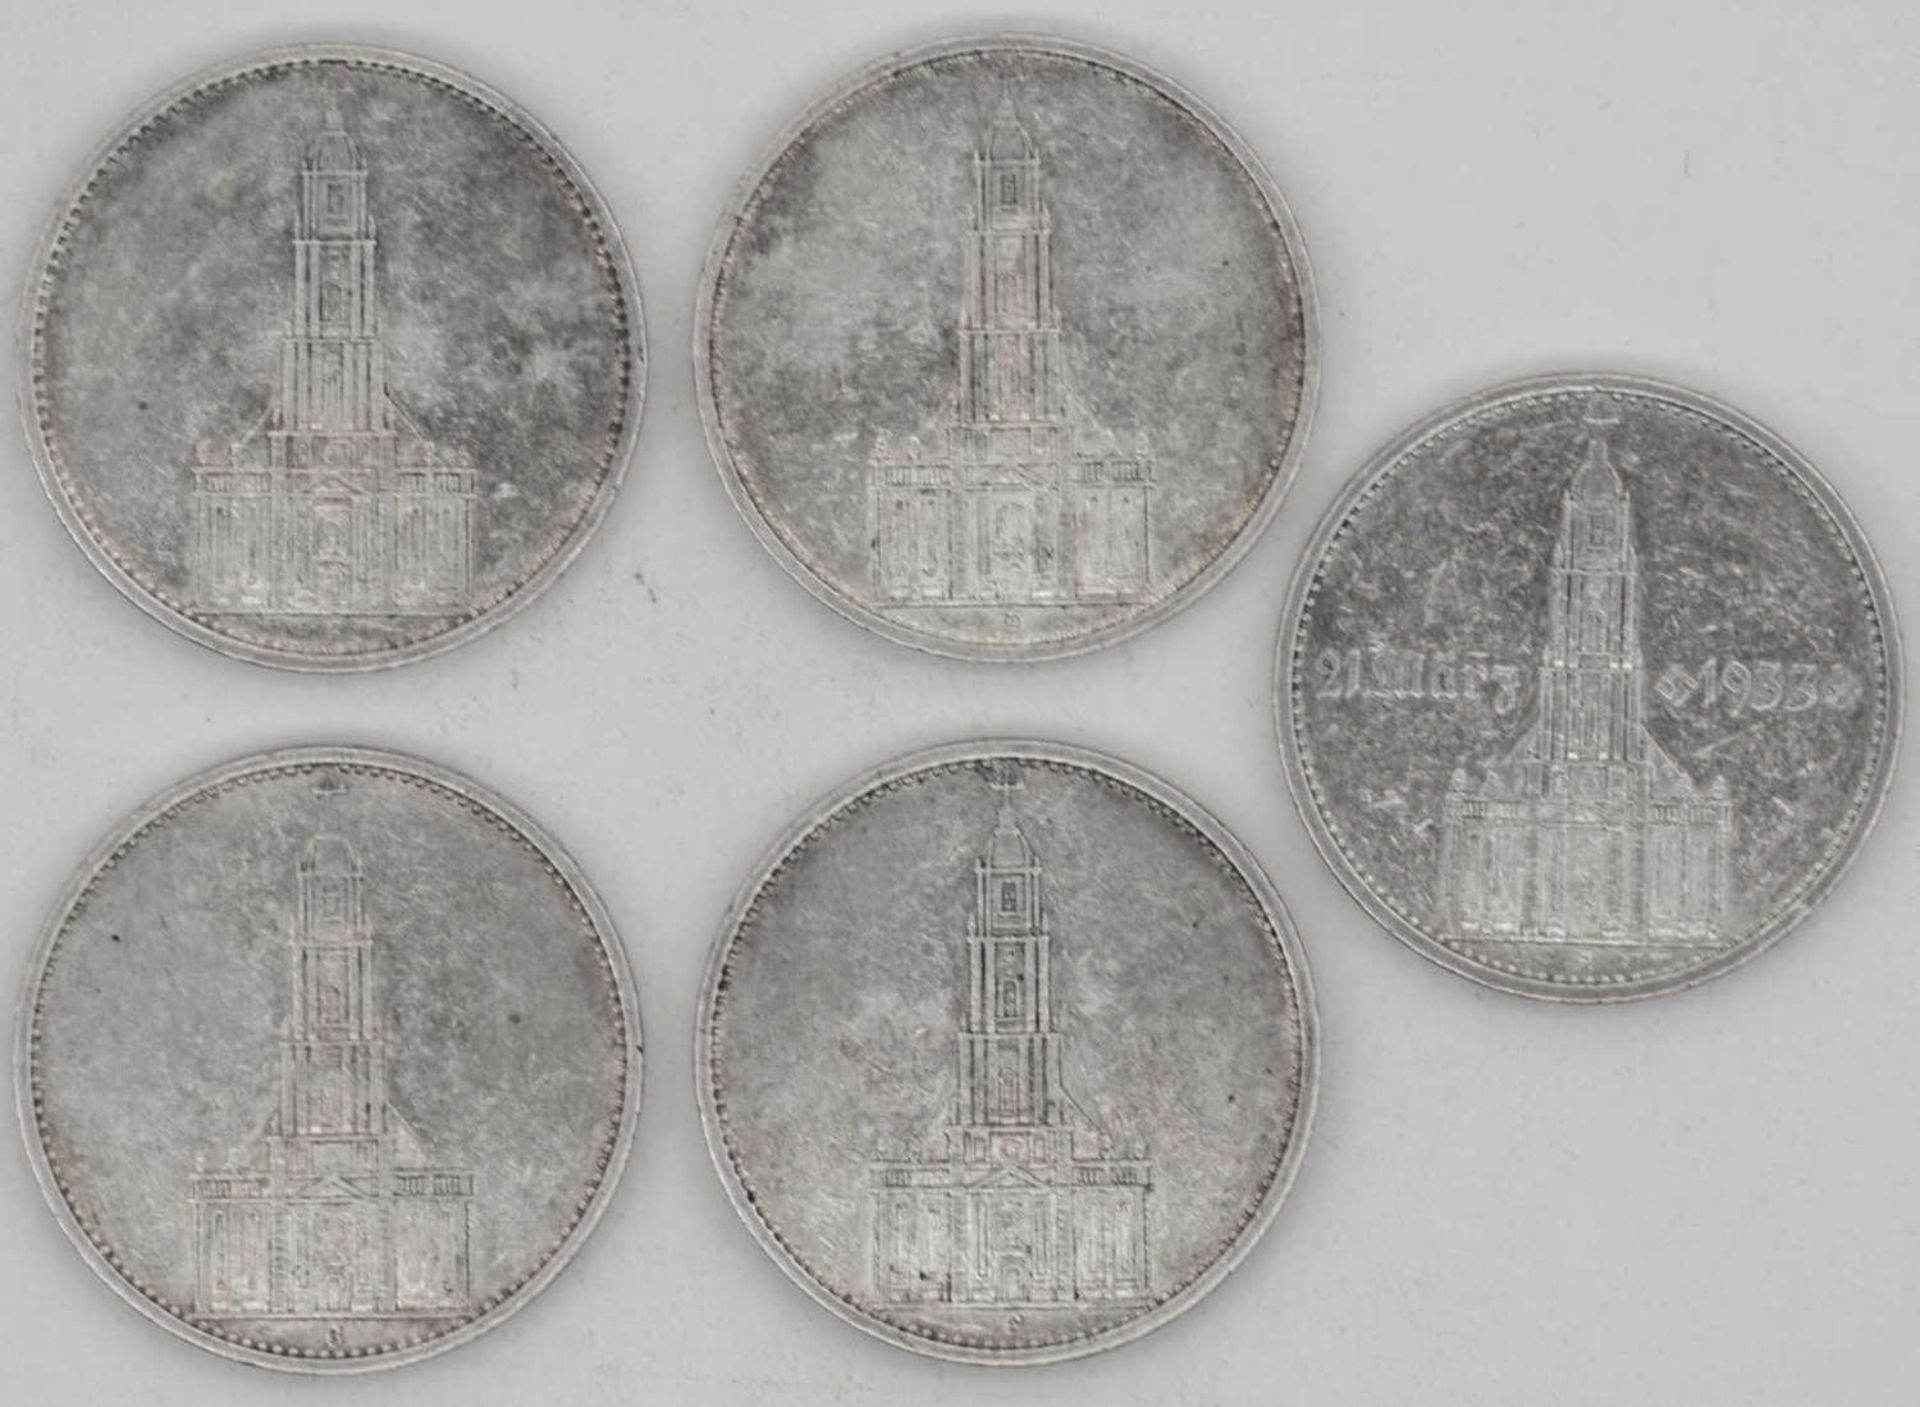 Deutschland 1934 A, D, E, F, G, Lot 5.- Reichsmark - Silbermünzen "Garnisonskirche". Qualität: ss.